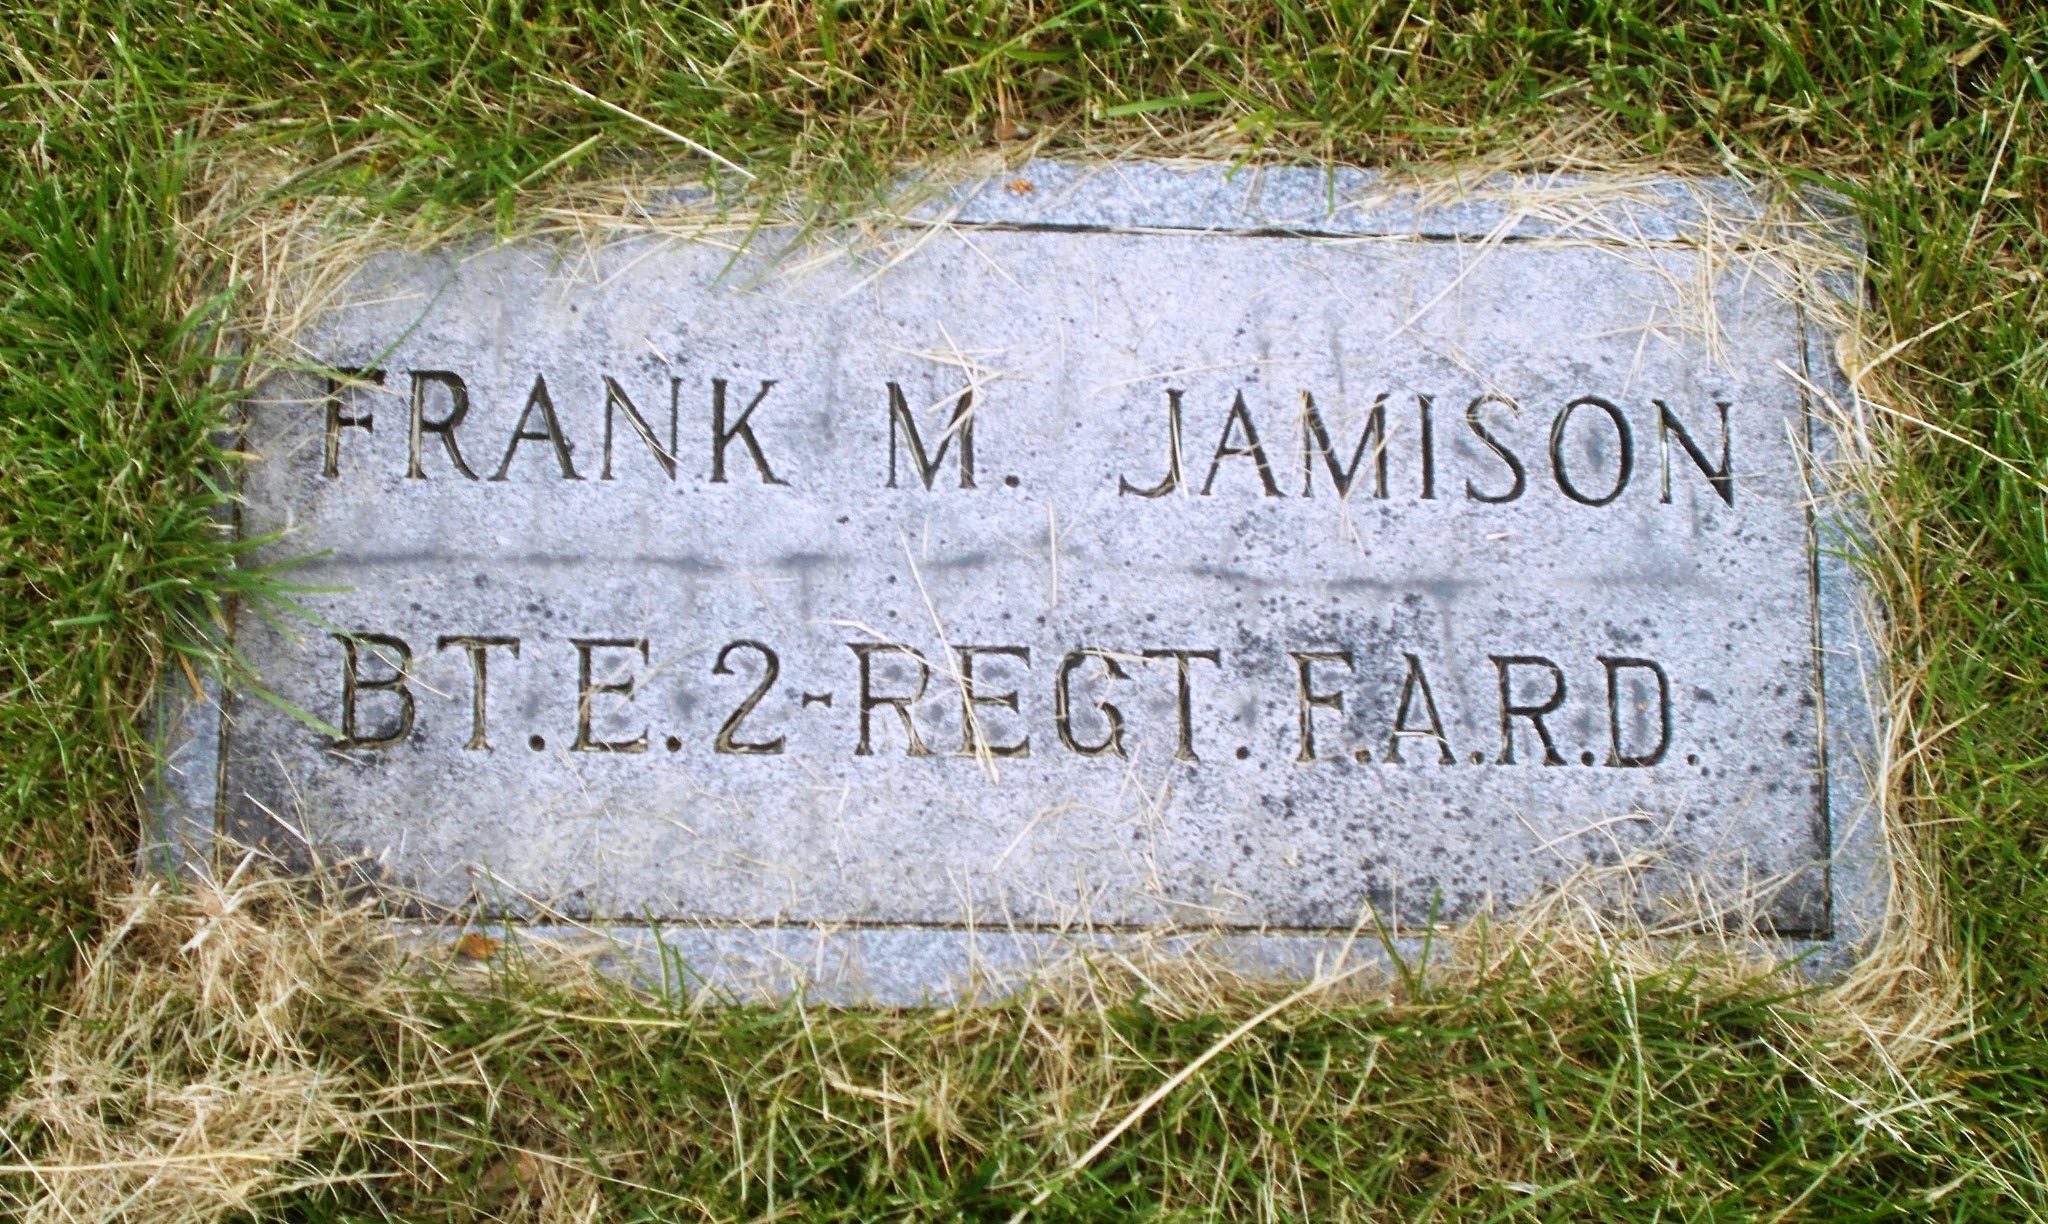 Frank M Jamison